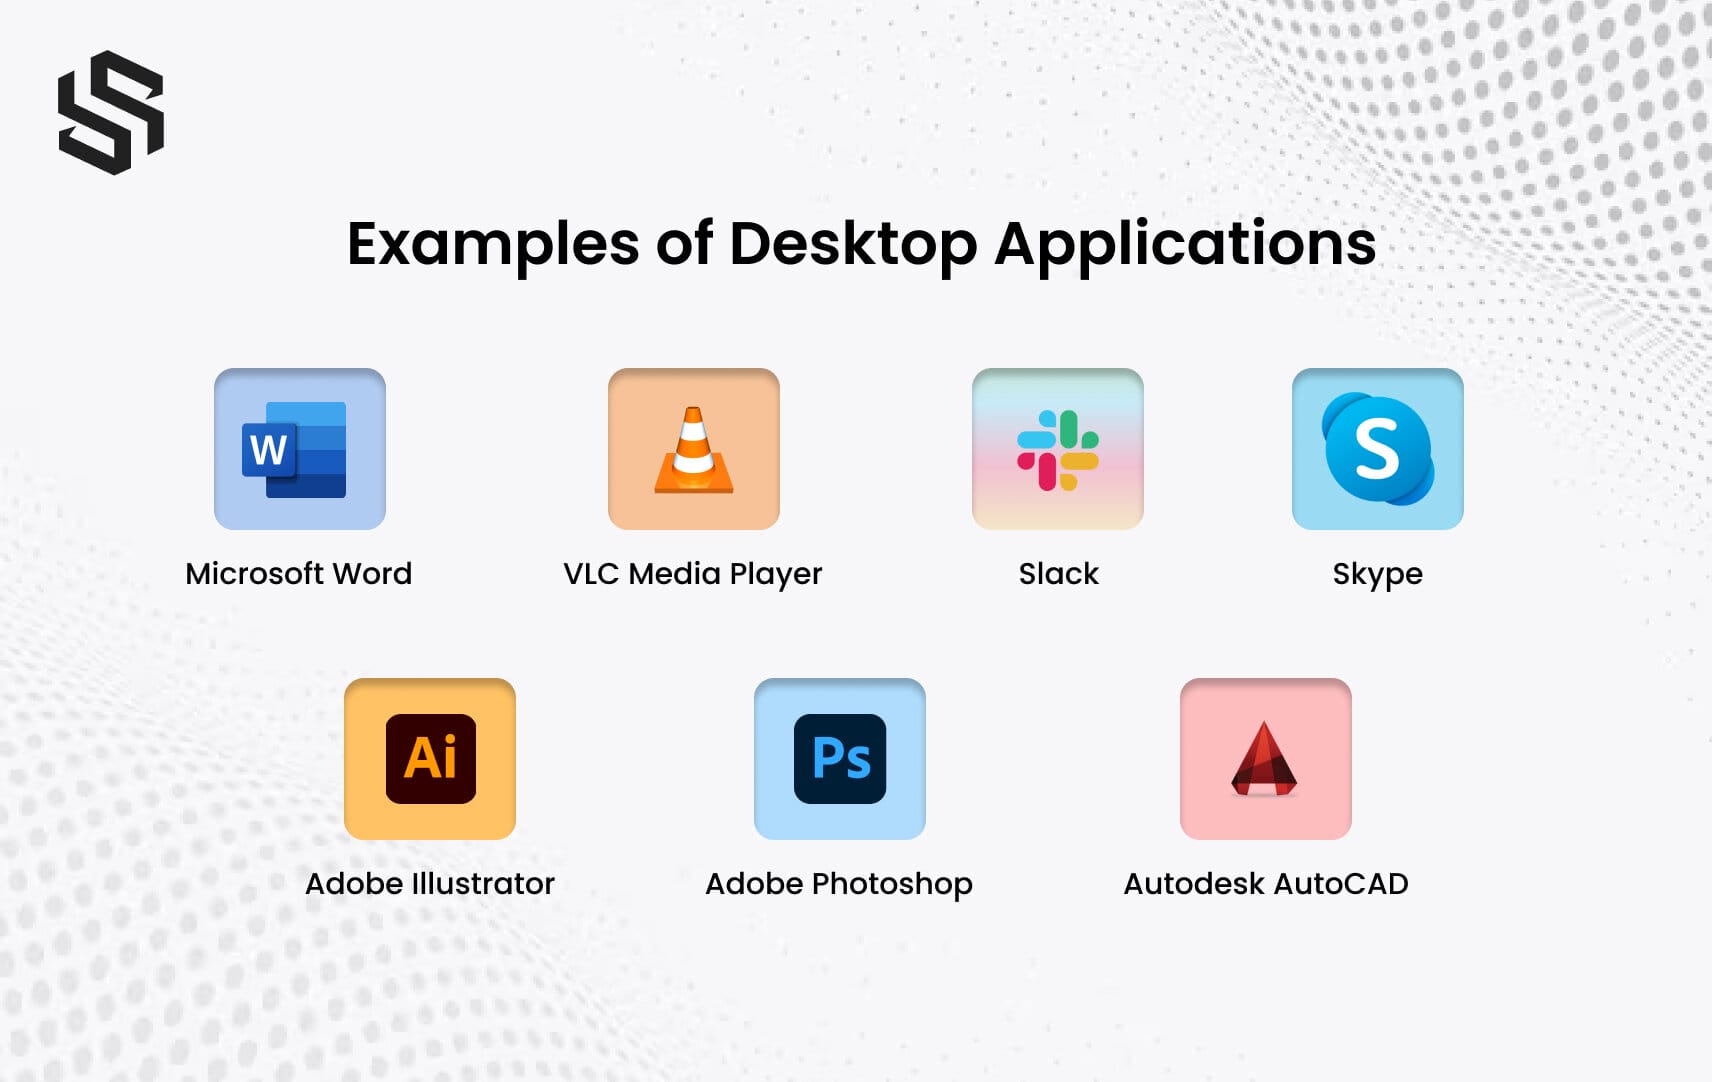 Examples of desktop applications